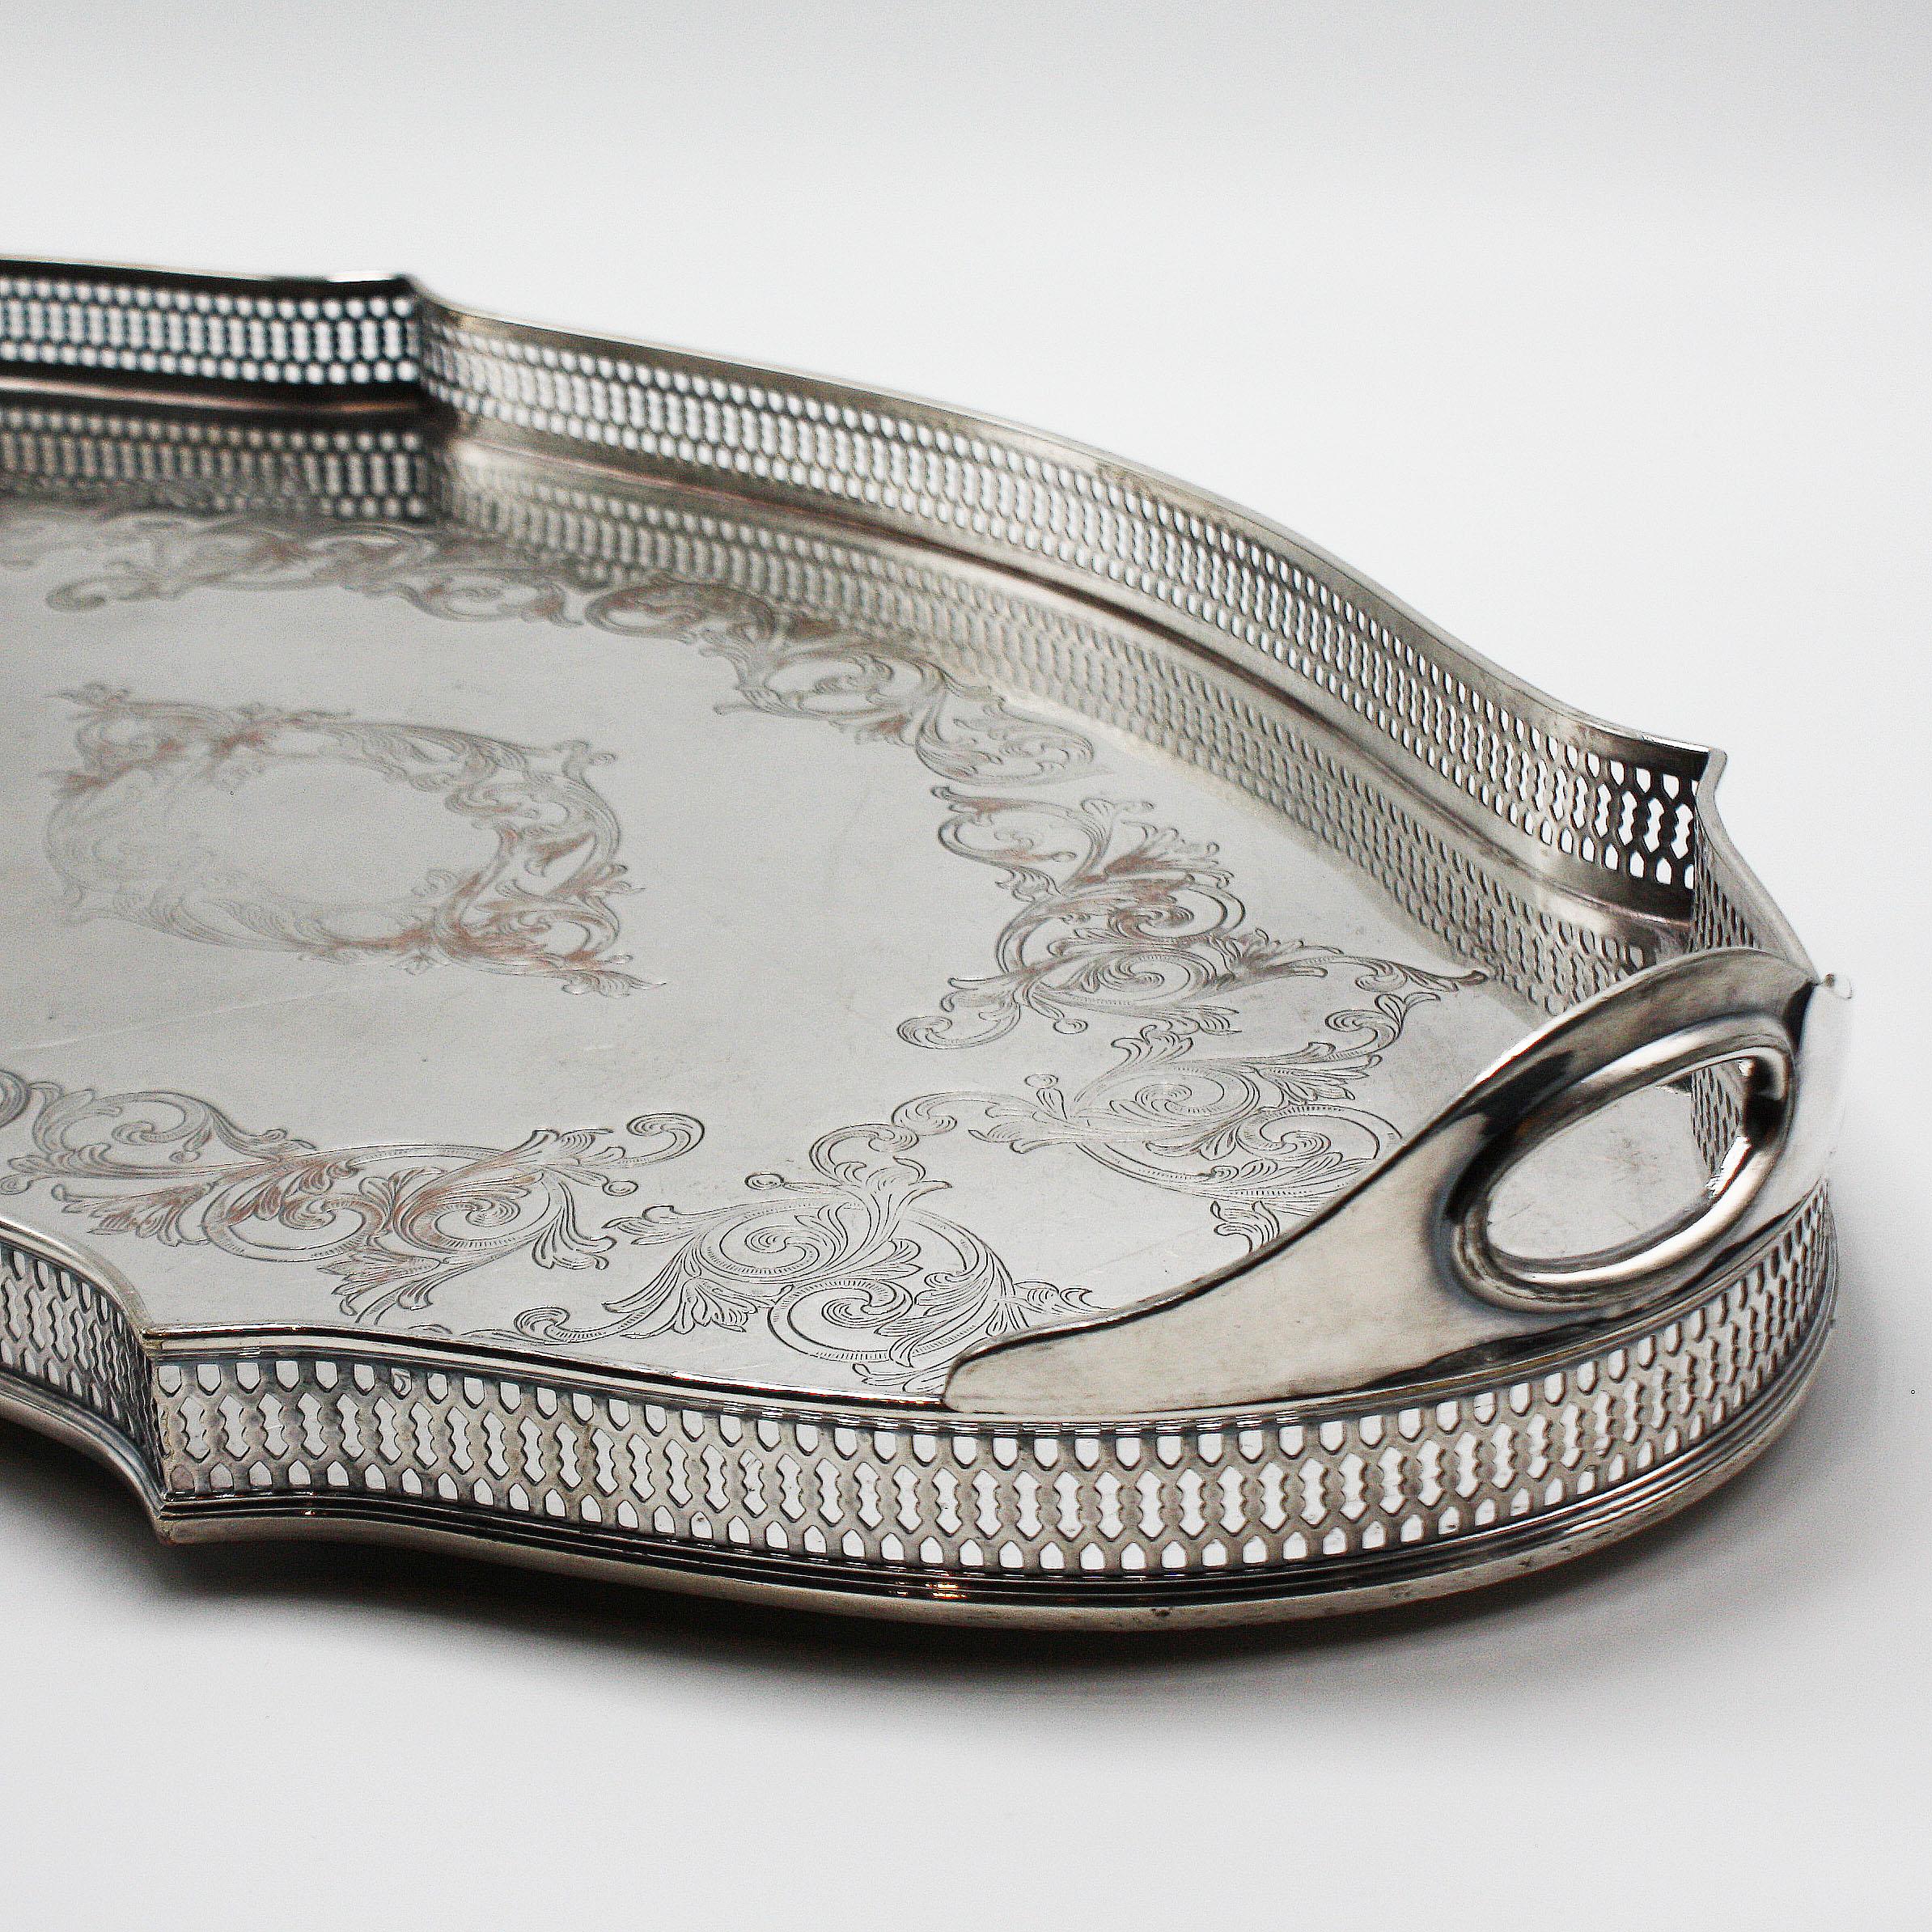 Silver plated pierced tray, circa 1940
$950.